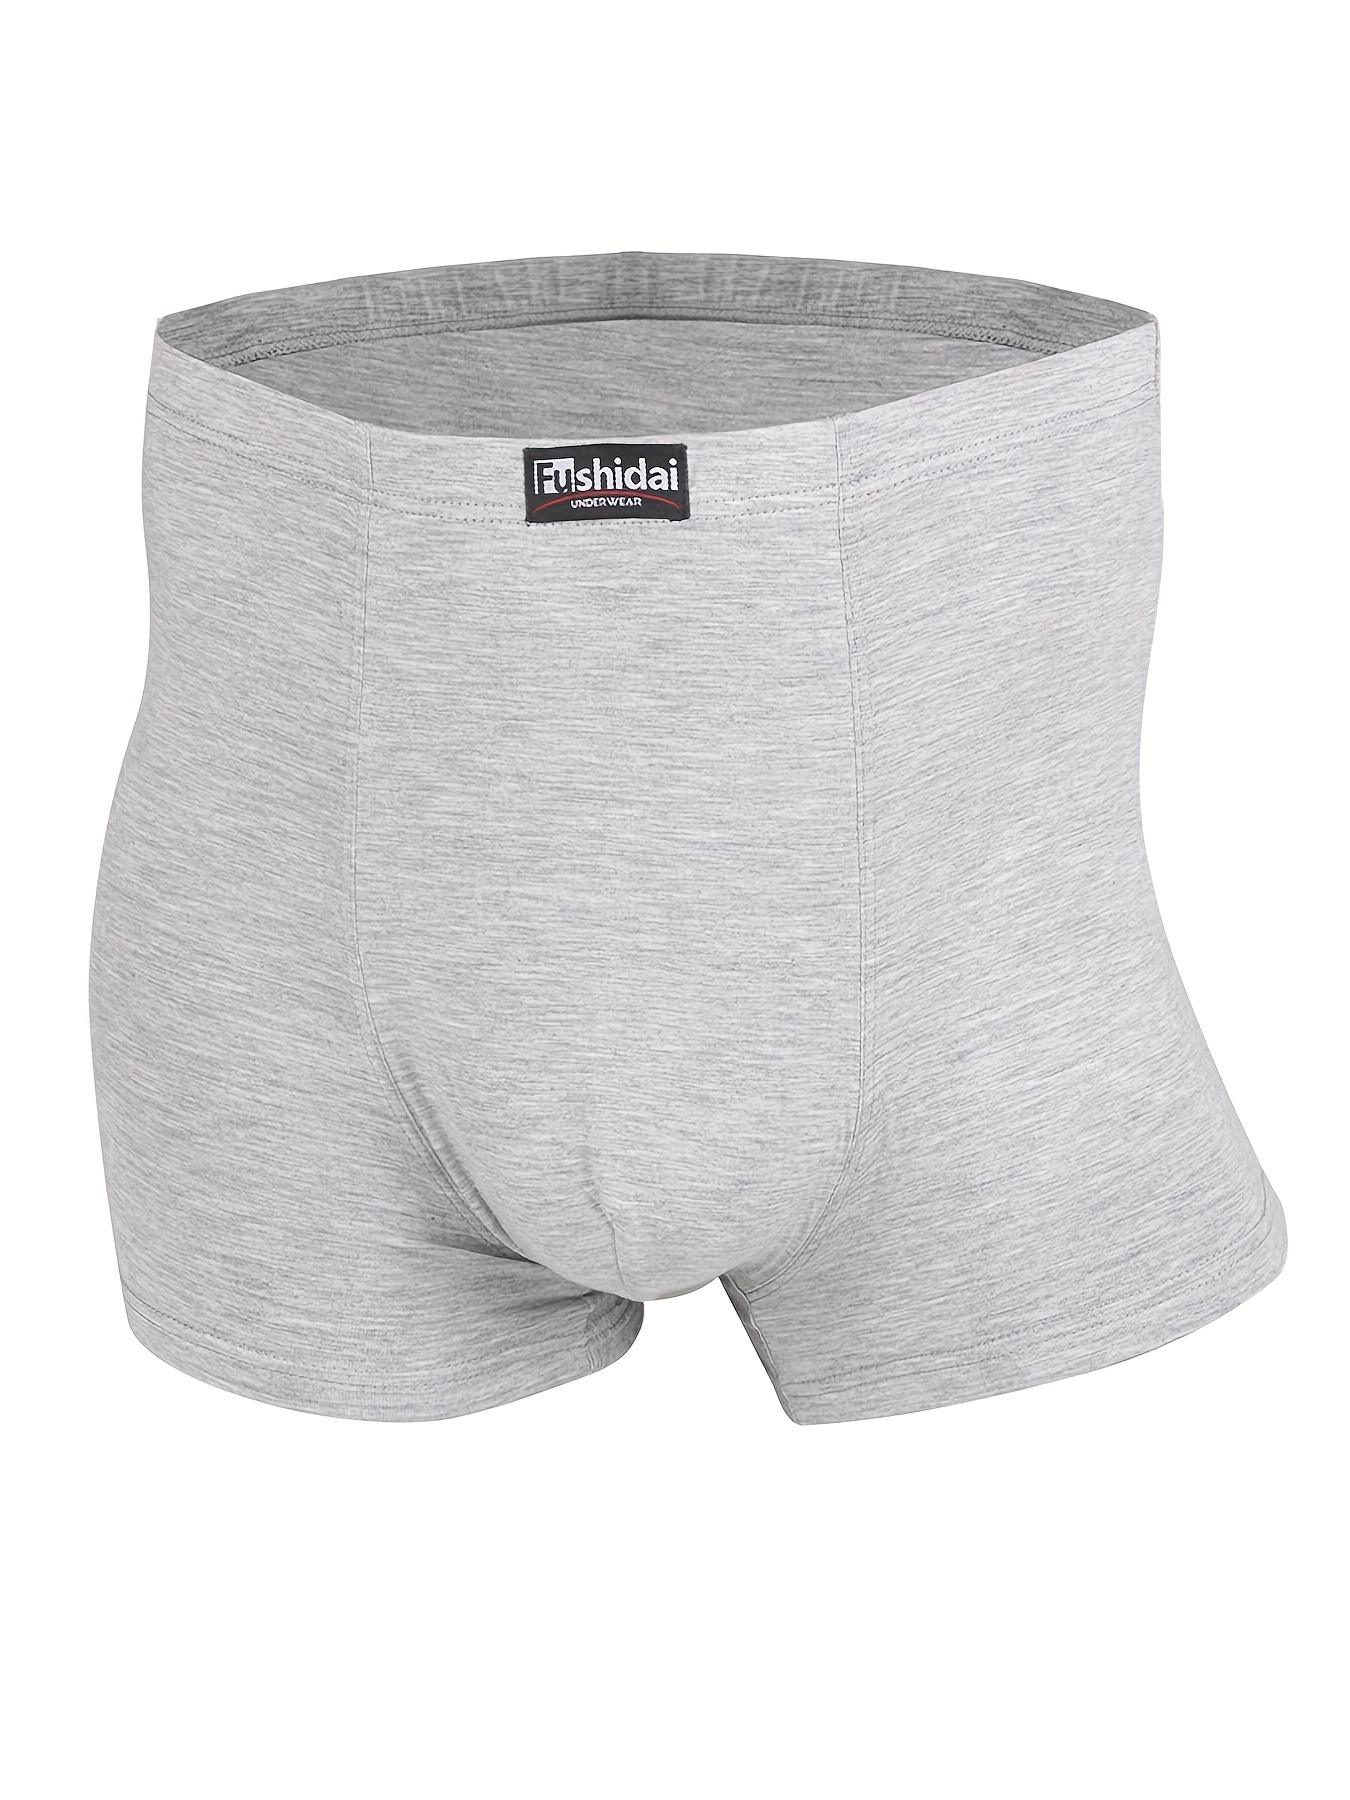 Men's Plus Size Briefs Breathable Comfy Quick Drying Panites